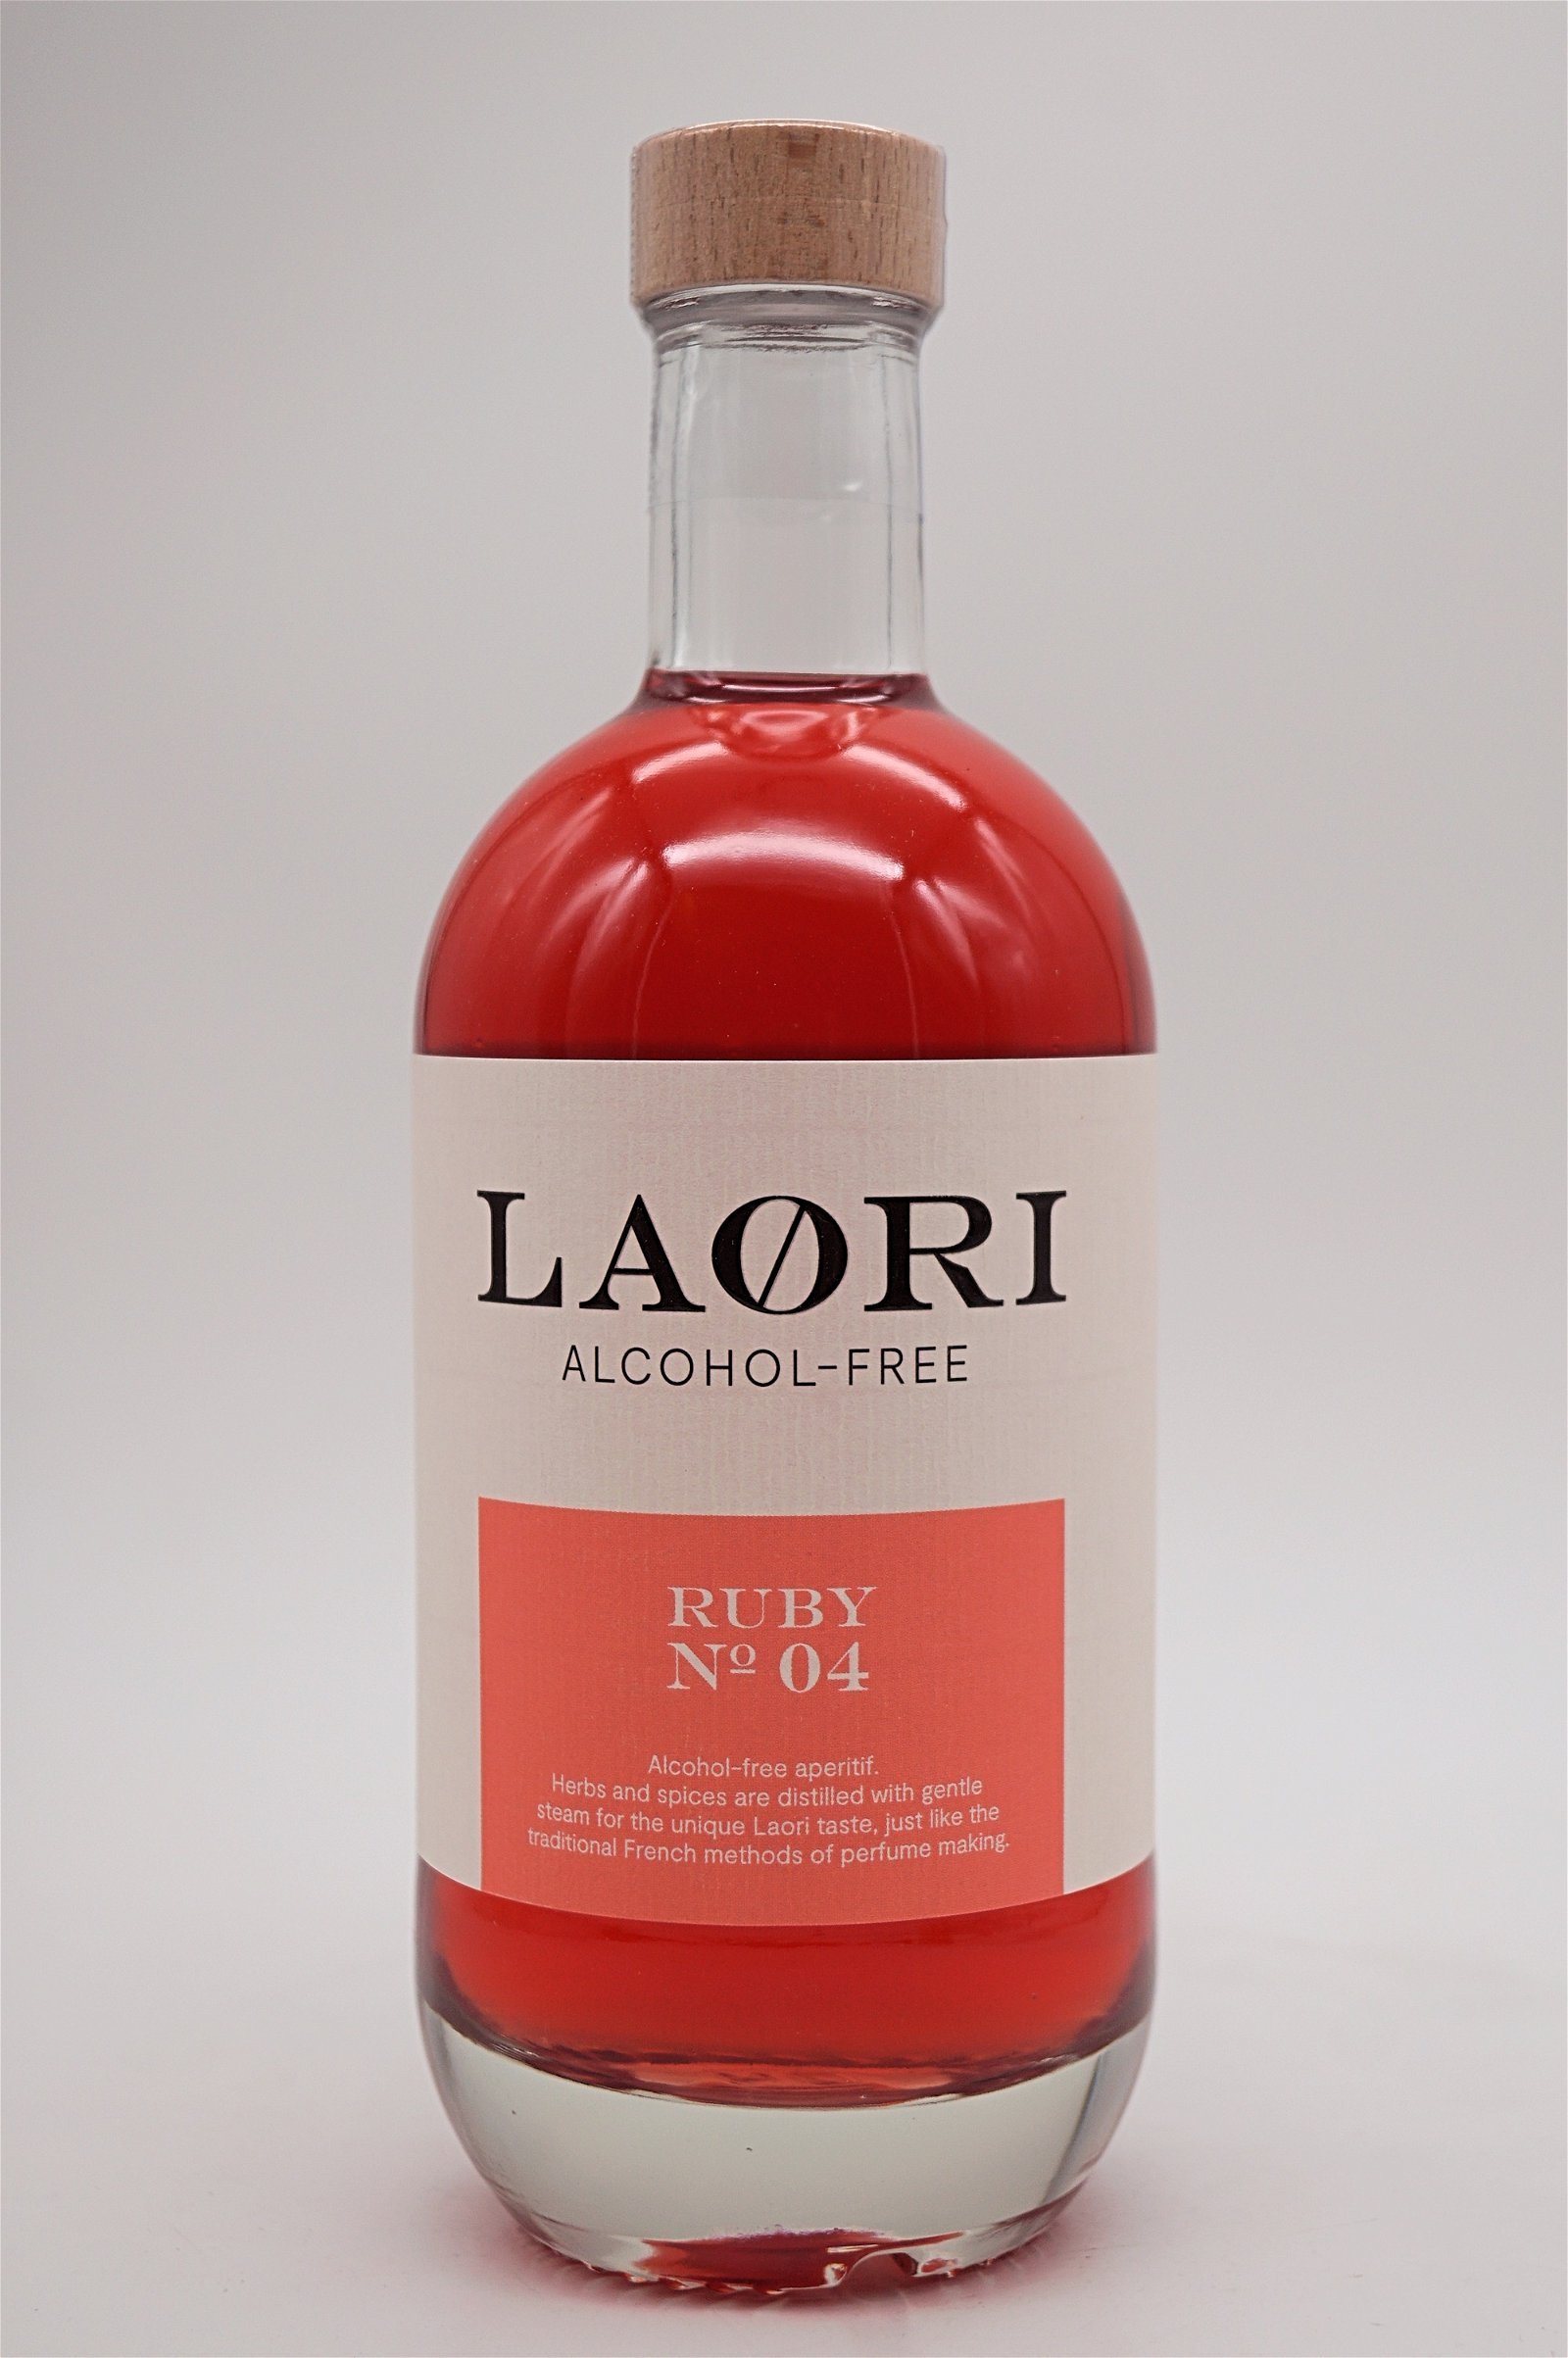 Laori Ruby No 04